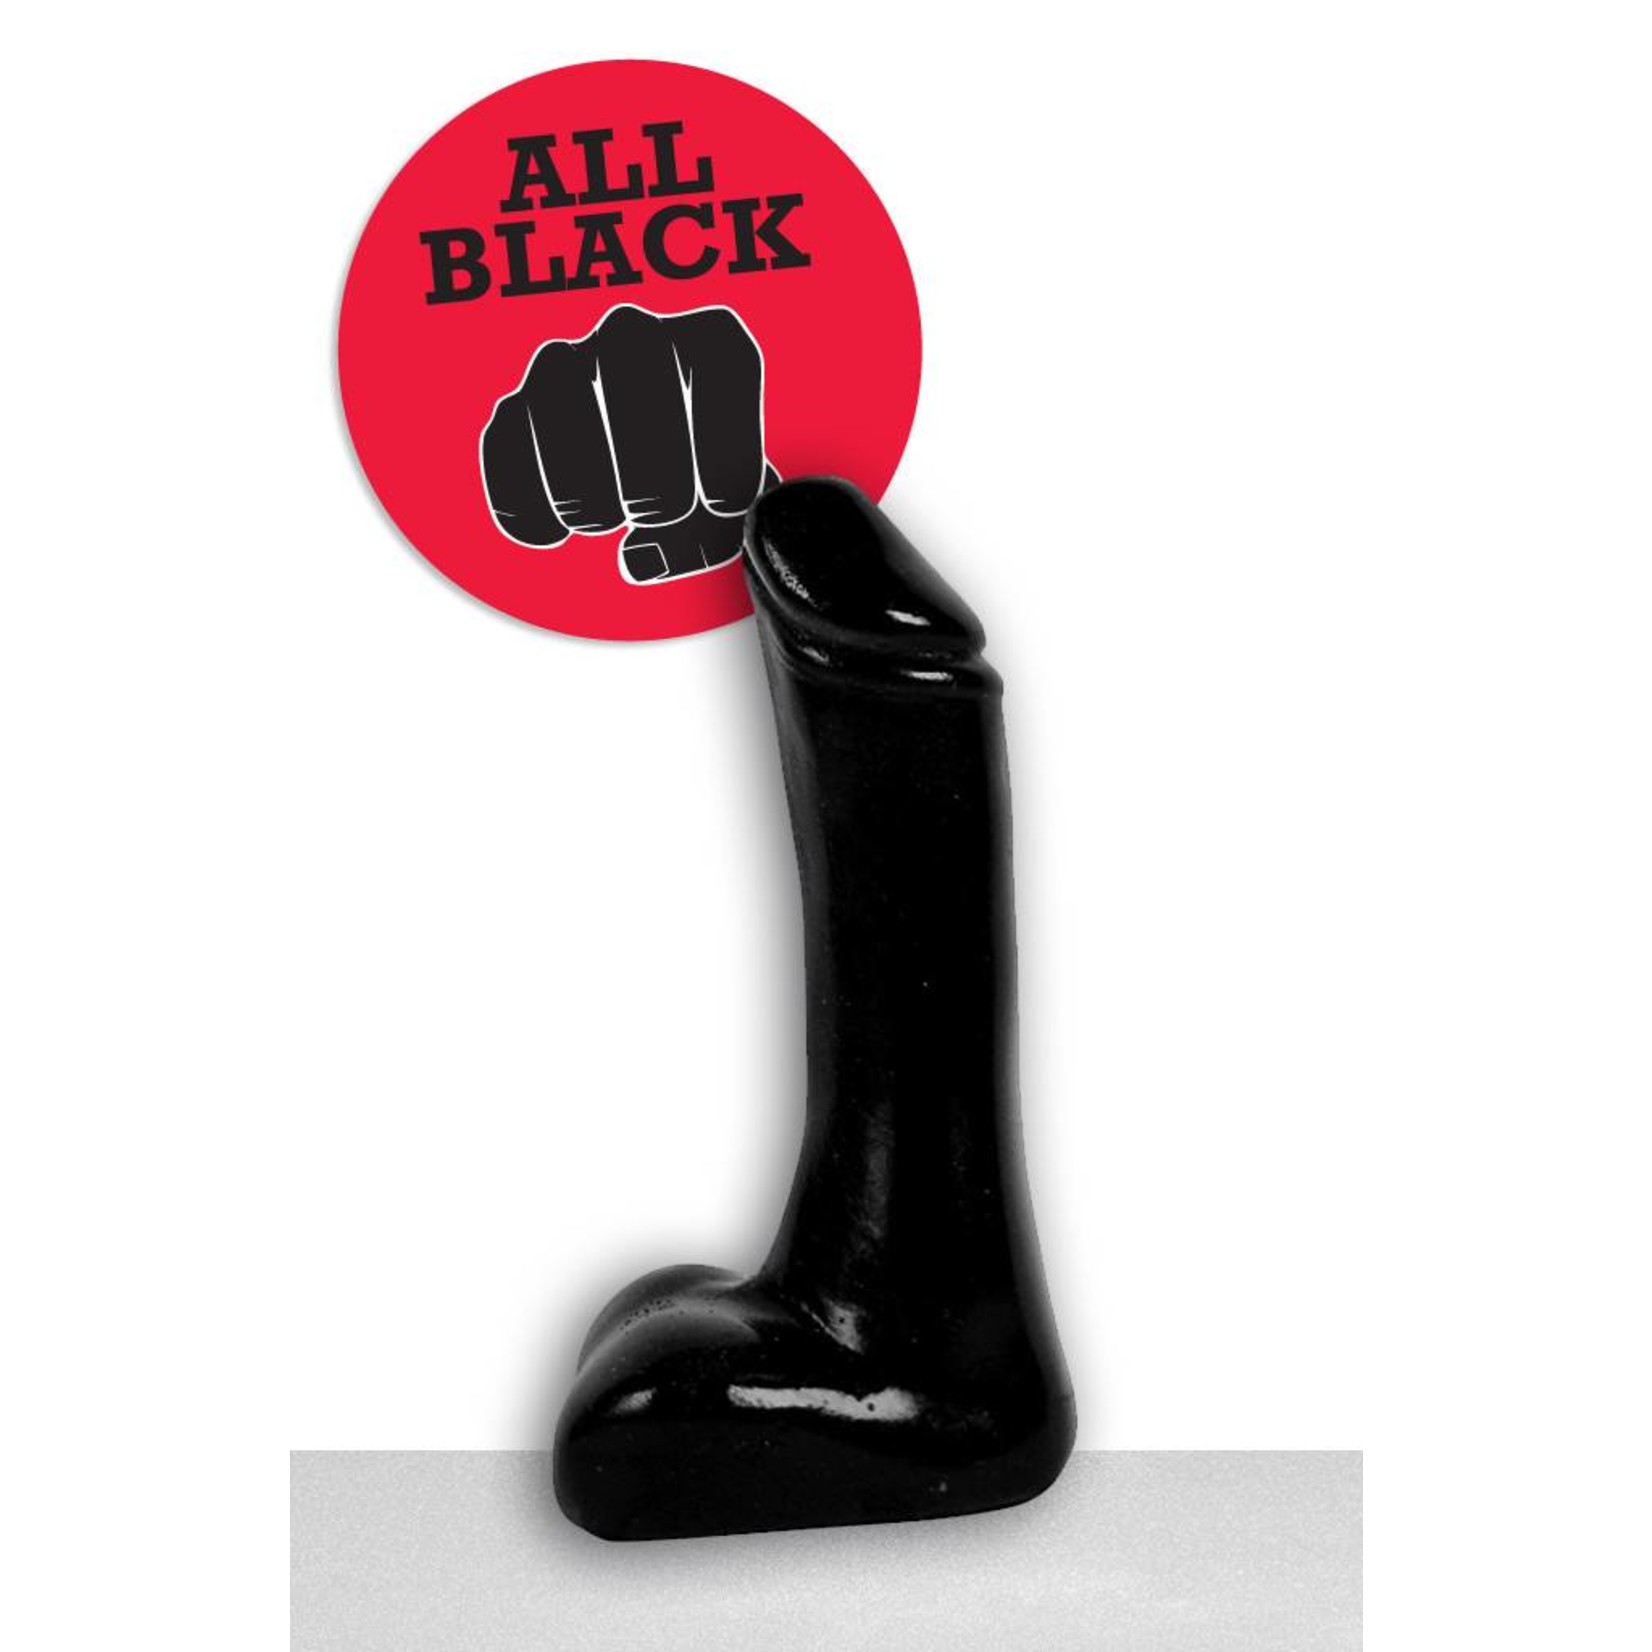 All Black All Black Dildo - AB 32